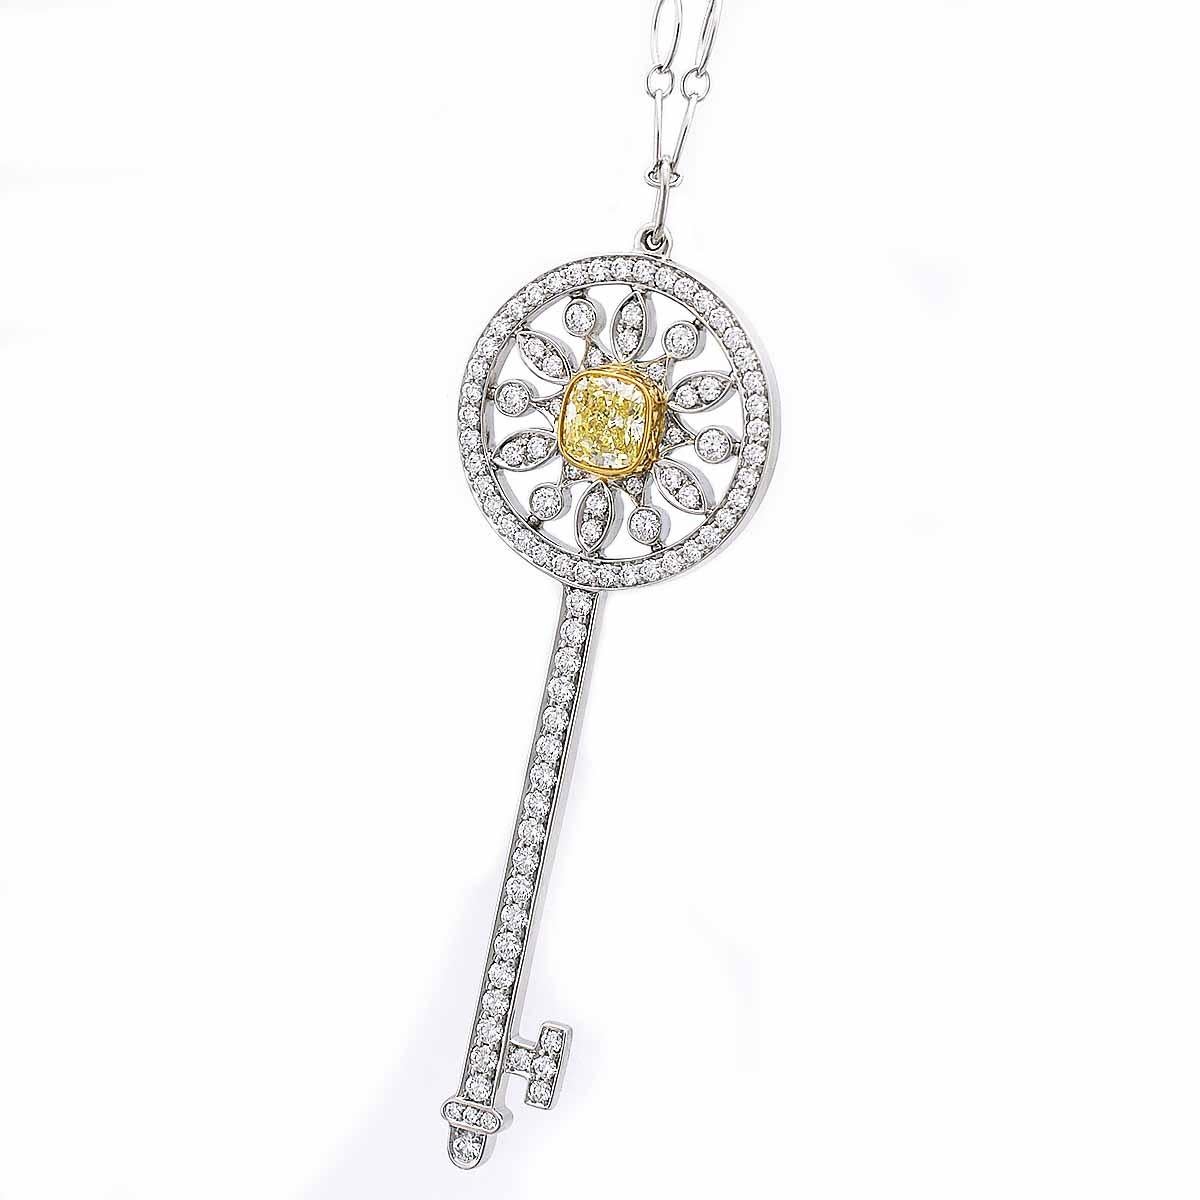 Tiffany & Co. Fancy Yellow Diamond 18 Karat Gold Star Key Pendant Necklace